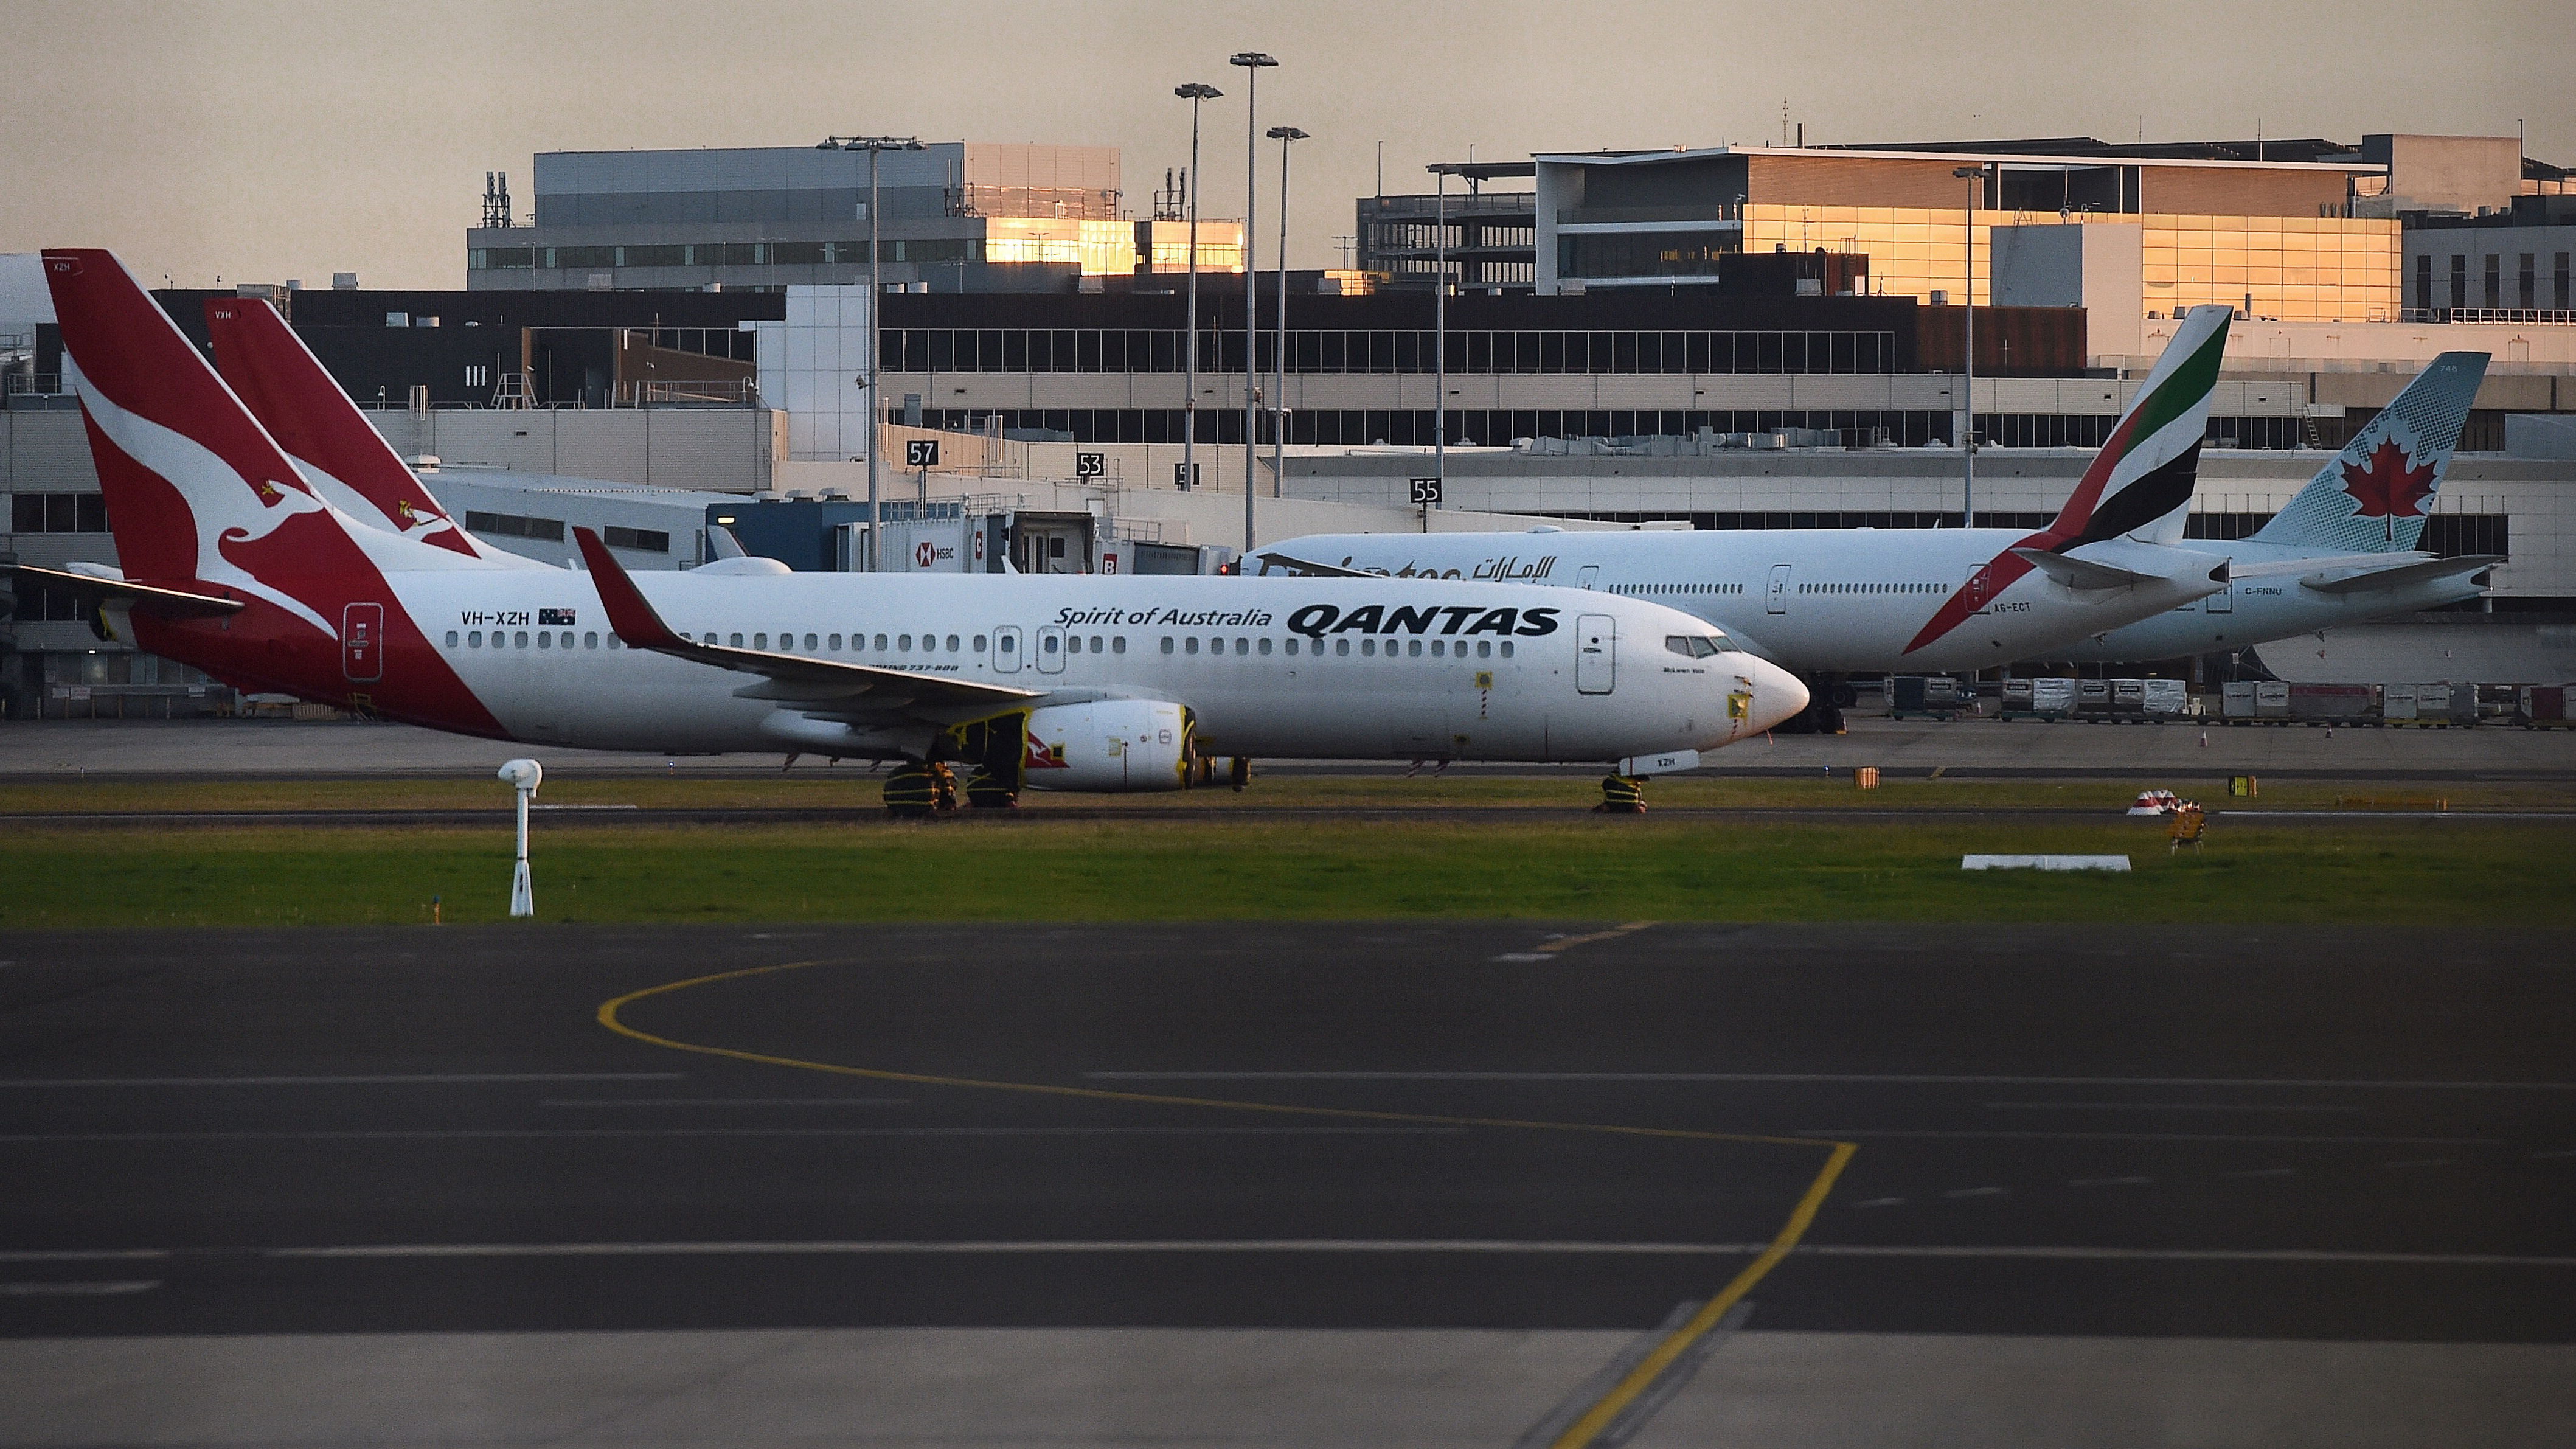 Qantas planes at Sydney airport, 